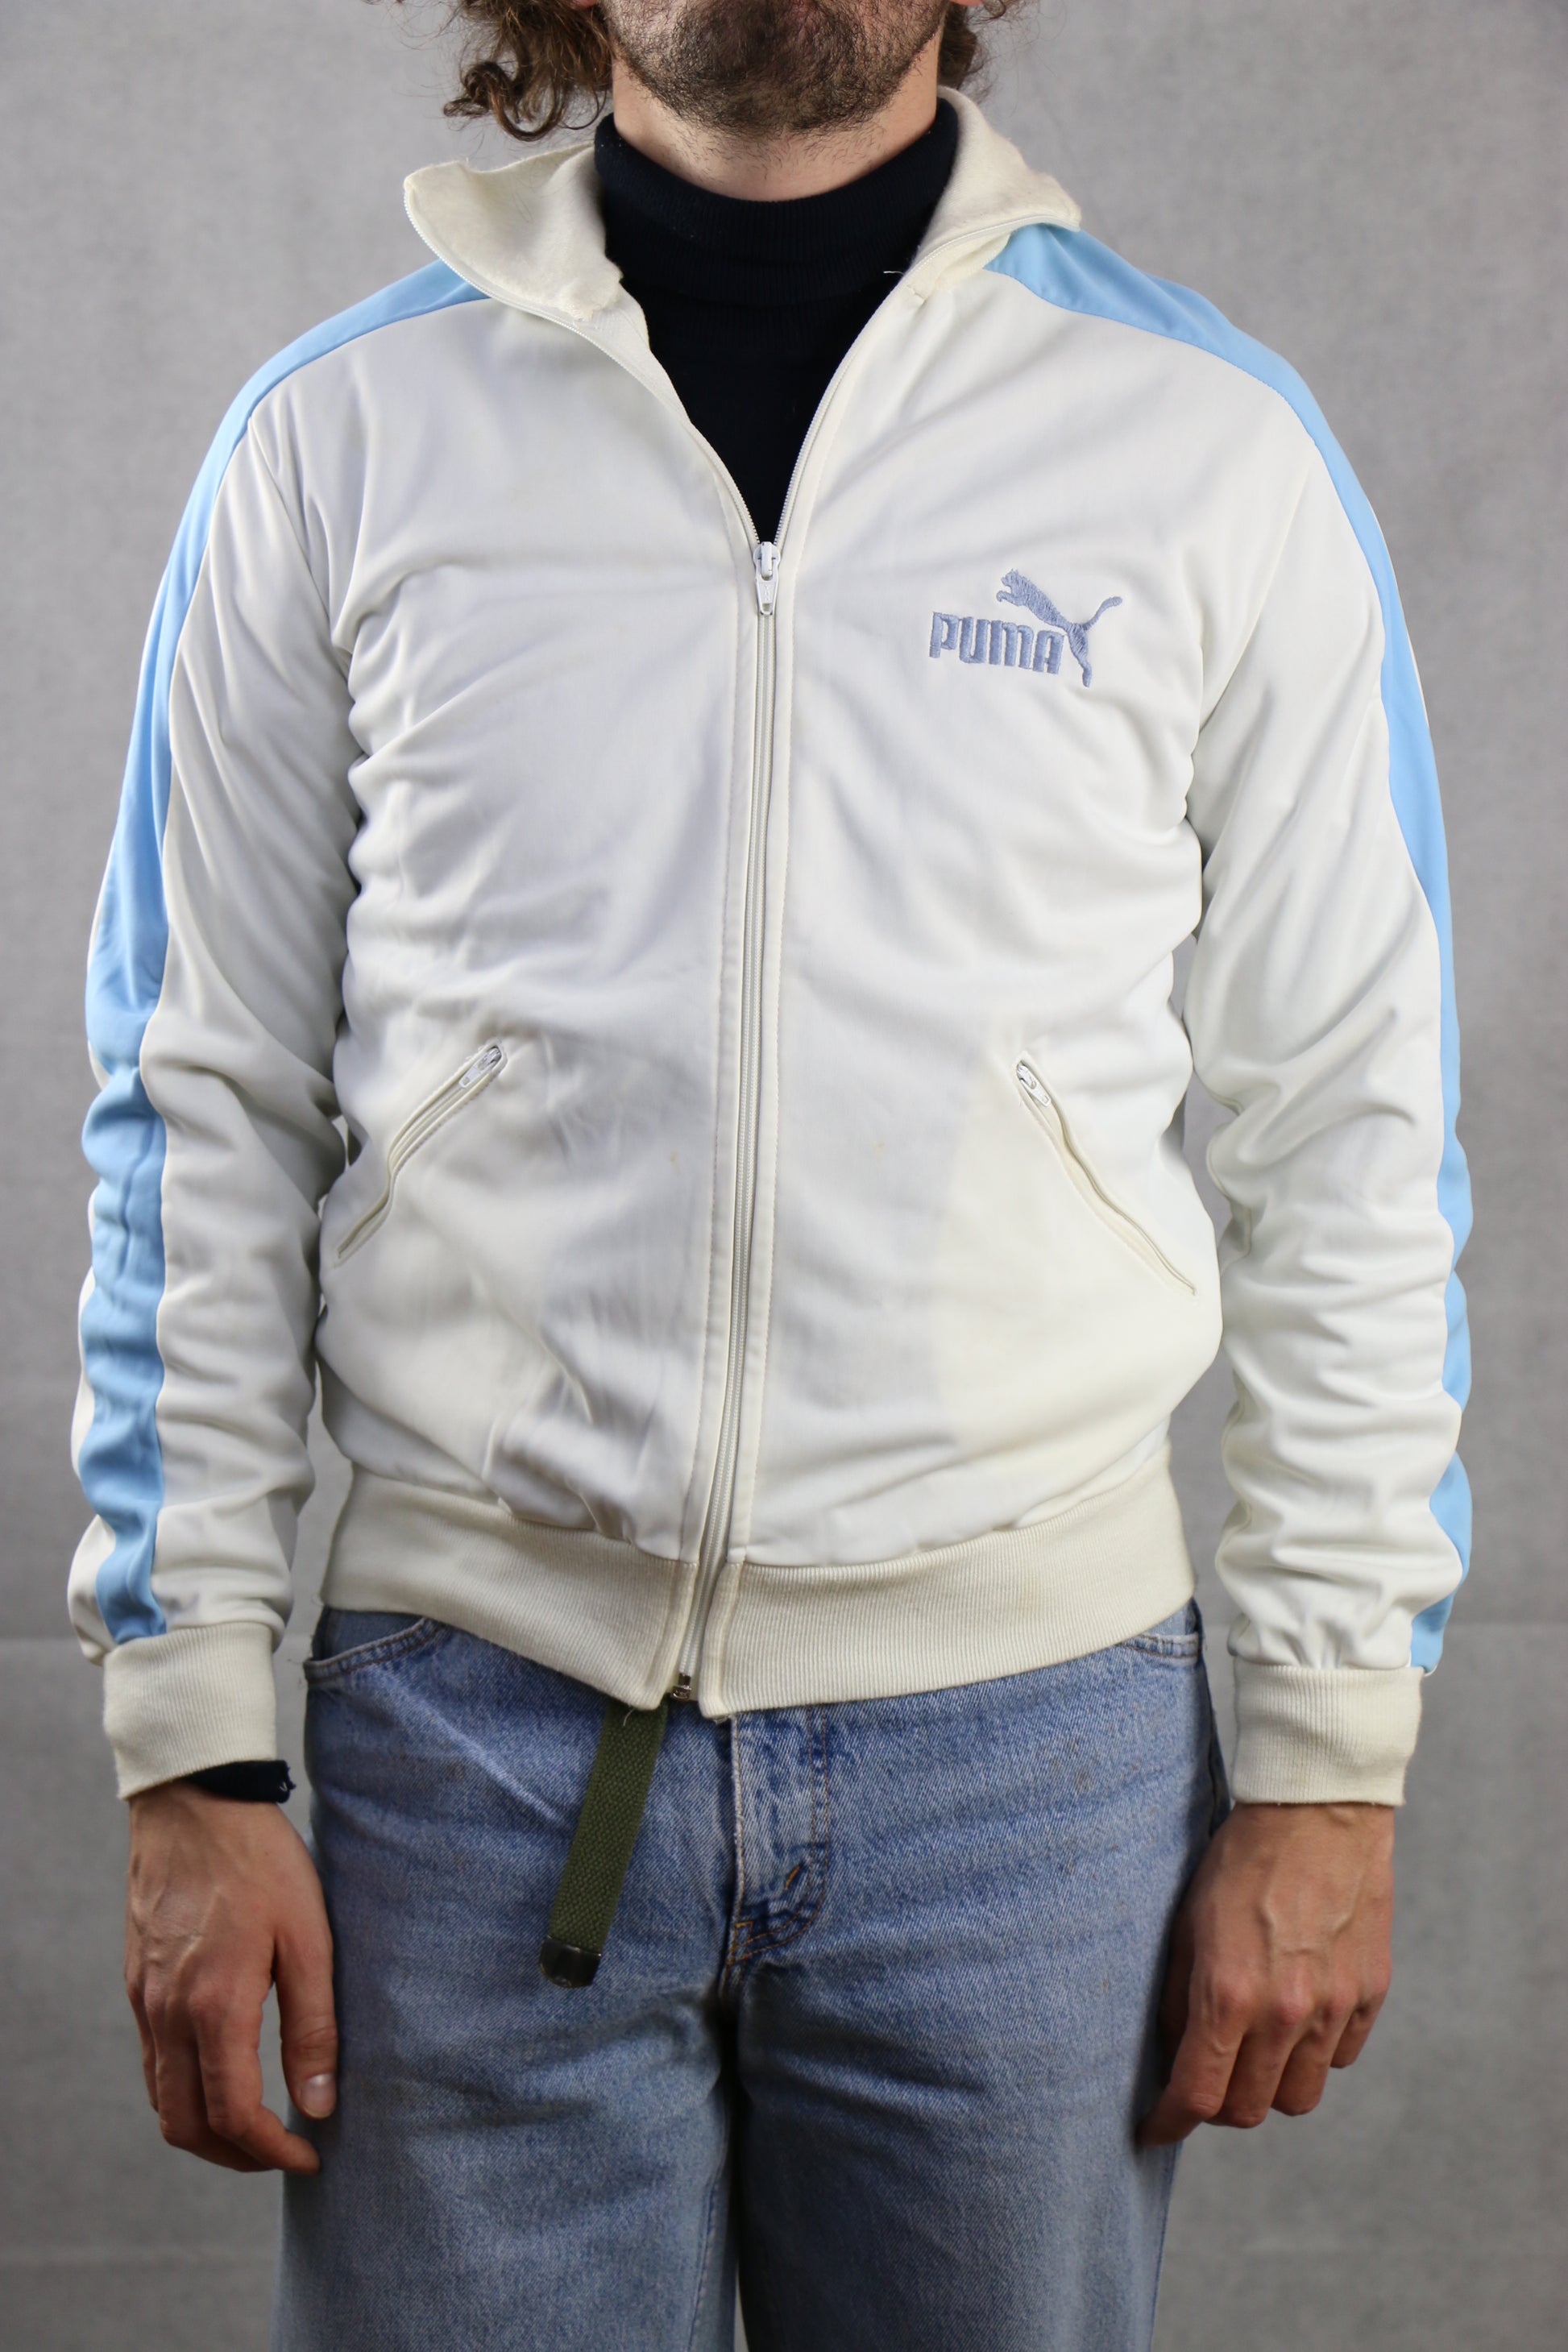 Puma White Track Jacket - vintage clothing clochard92.com